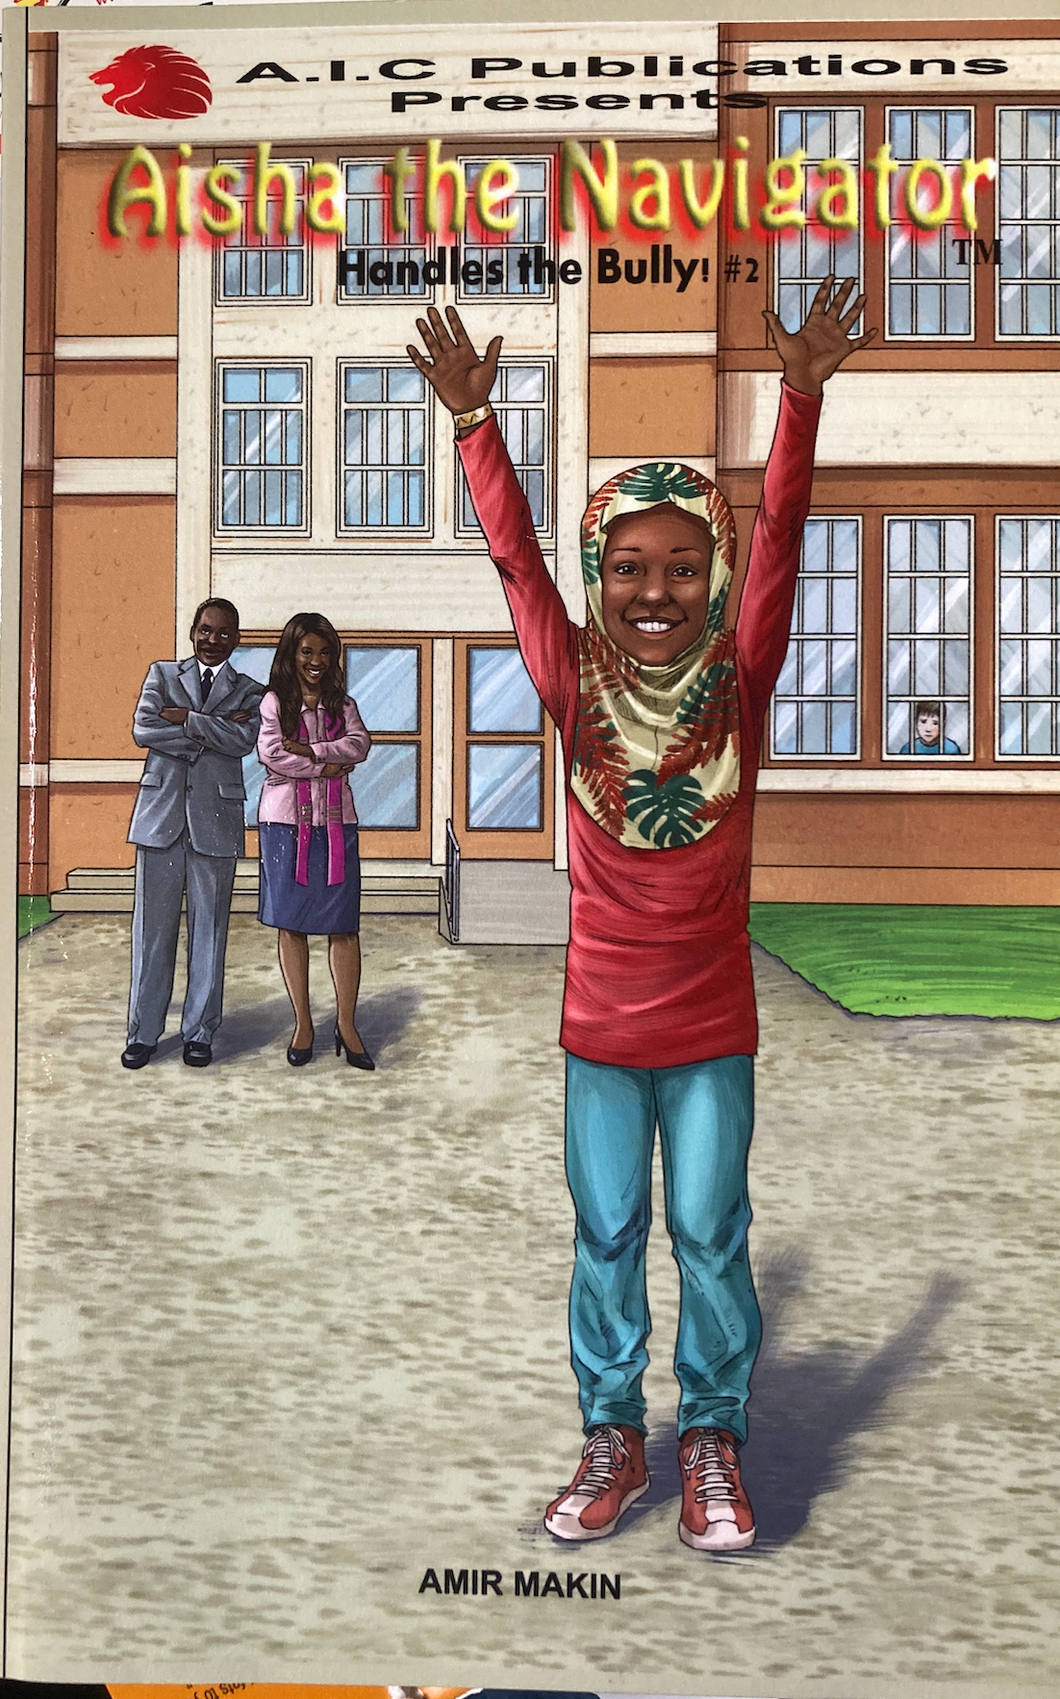 Aisha the Navigator Handles the Bully! Book 2